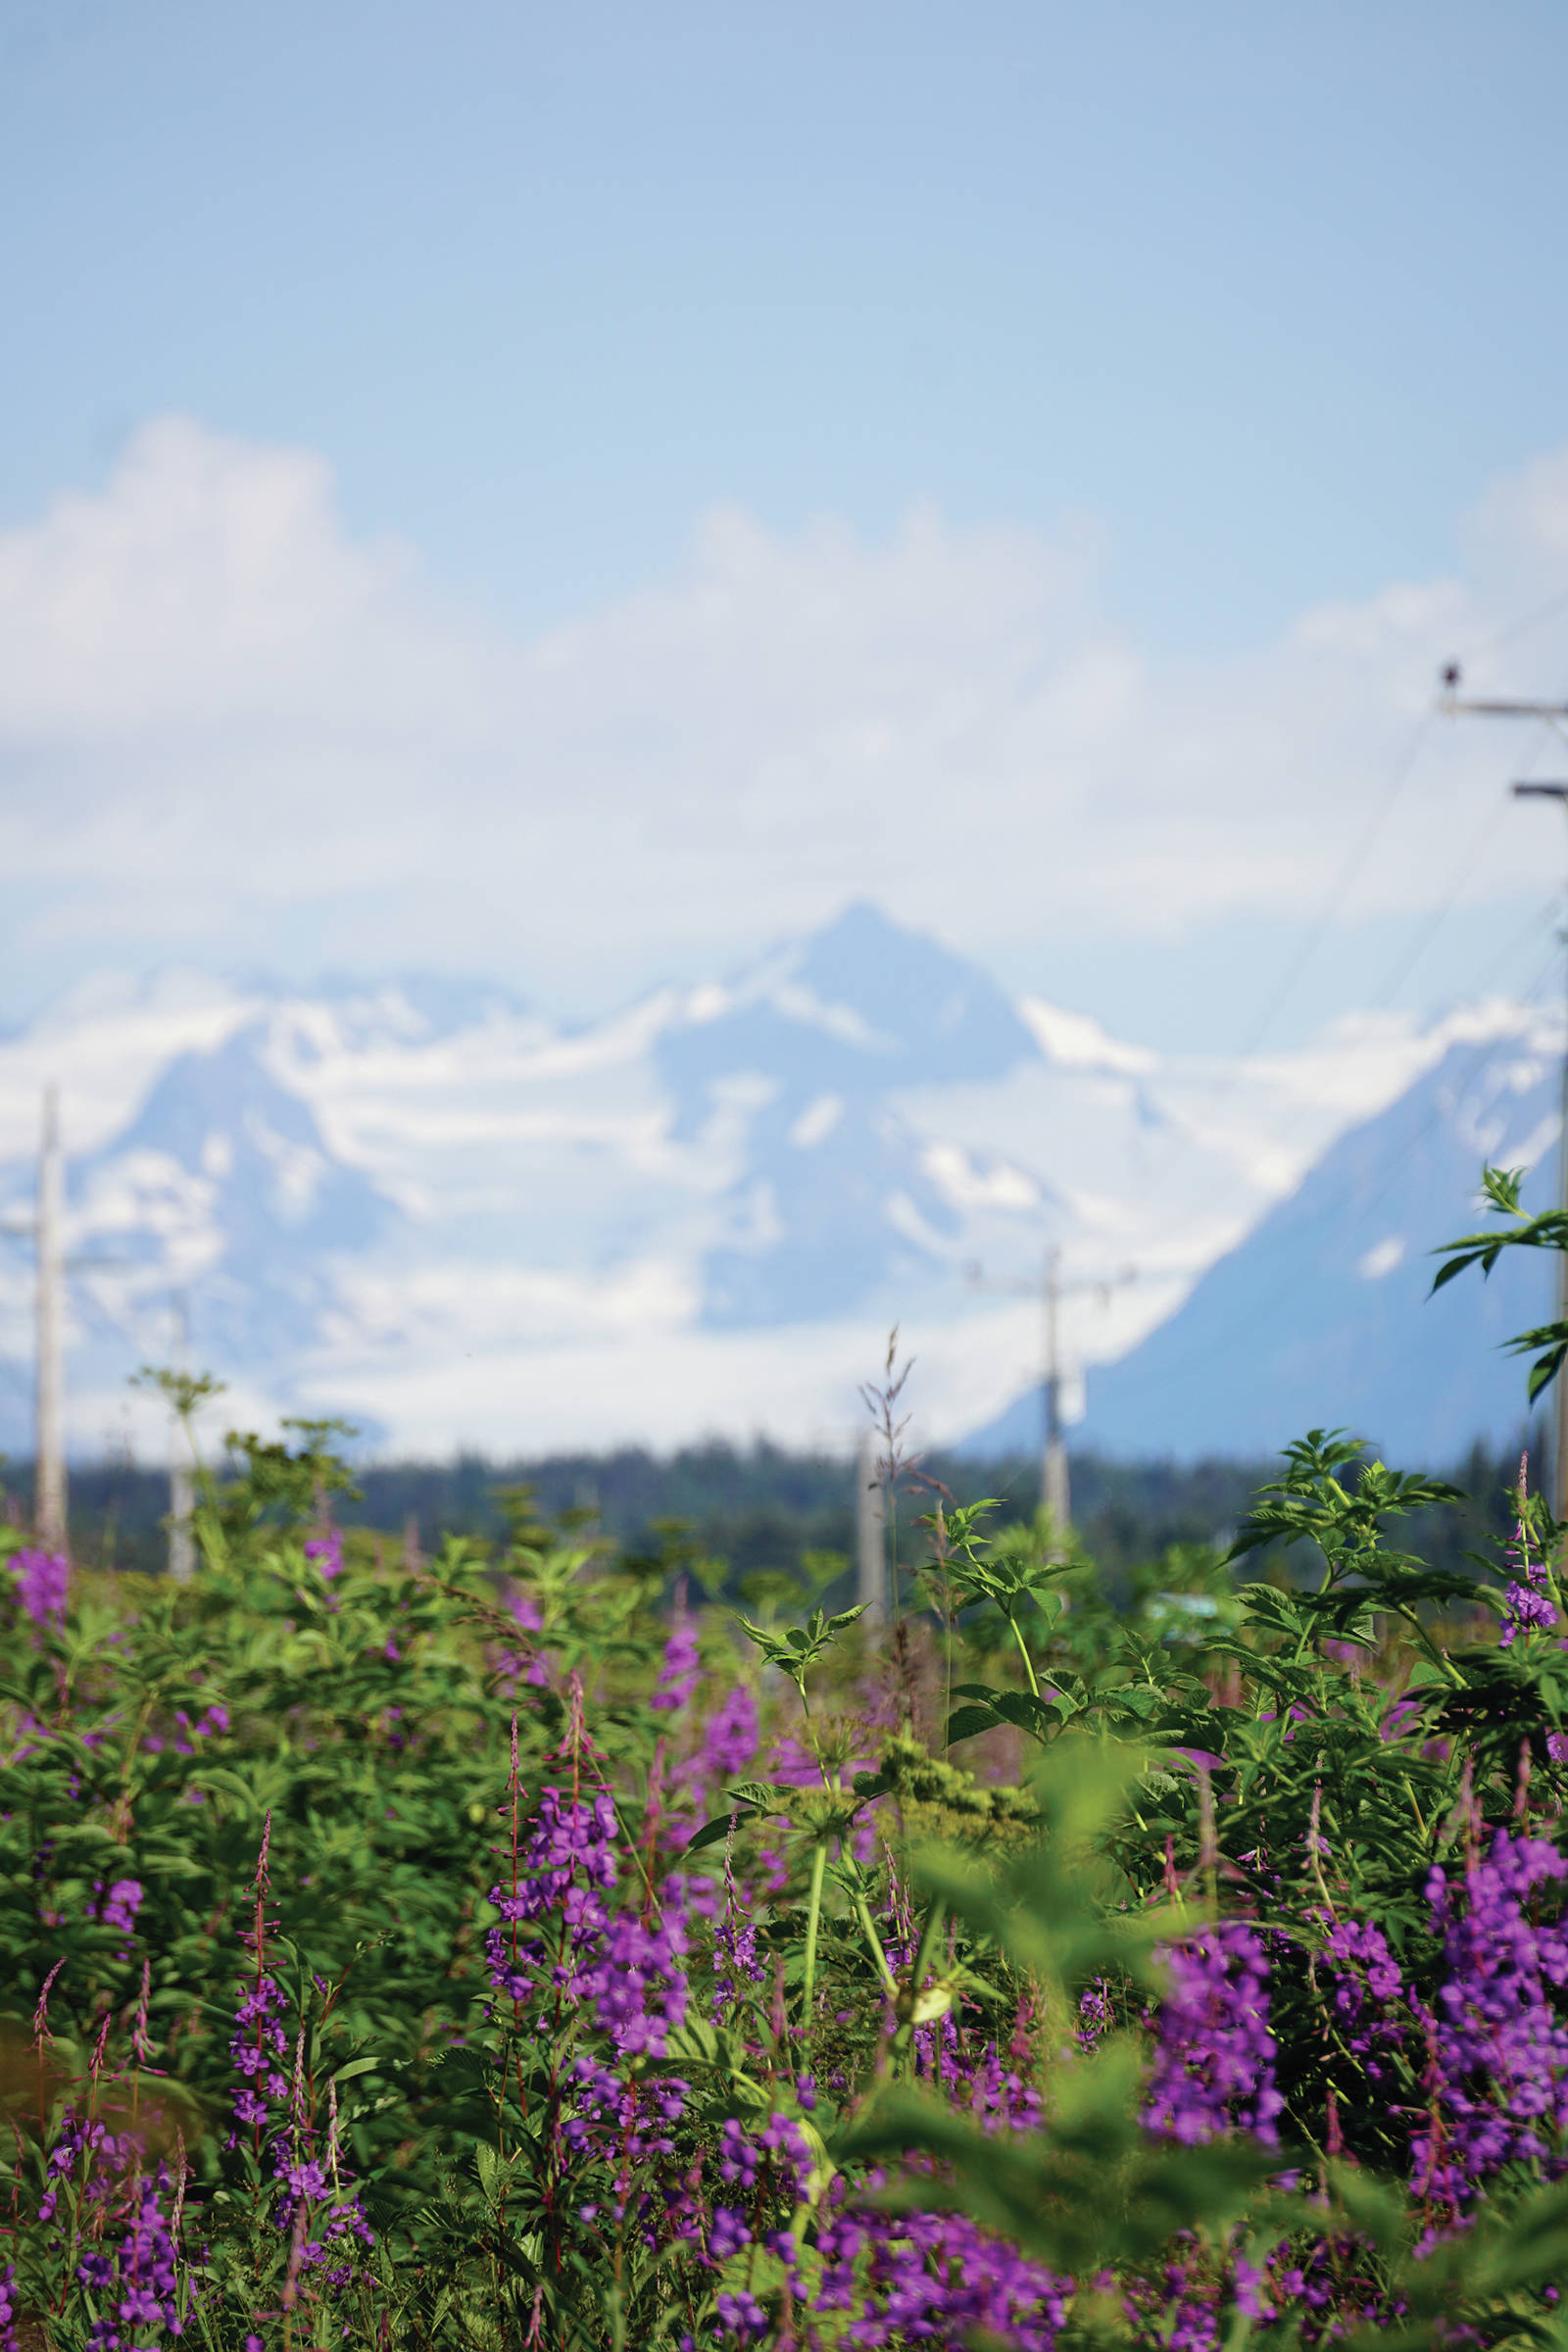 Fireweed blooms on July 17, 2019, in the fields around Diamond Ridge Road in Homer, Alaska, as Grewingk Glacier looms across Kachemak Bay. (Photo by MIchael Armstrong/Homer News)